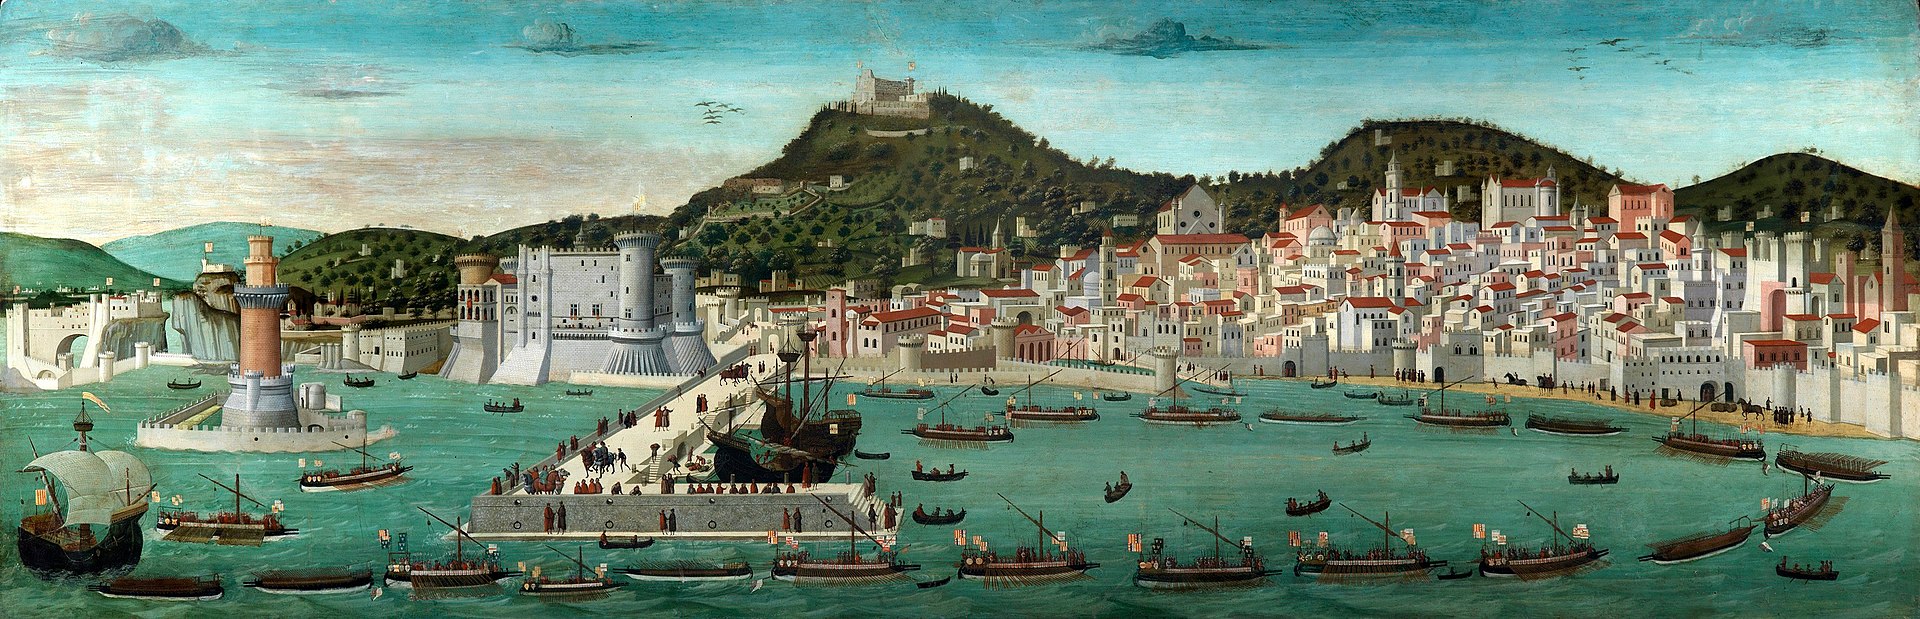 Naples in 1472